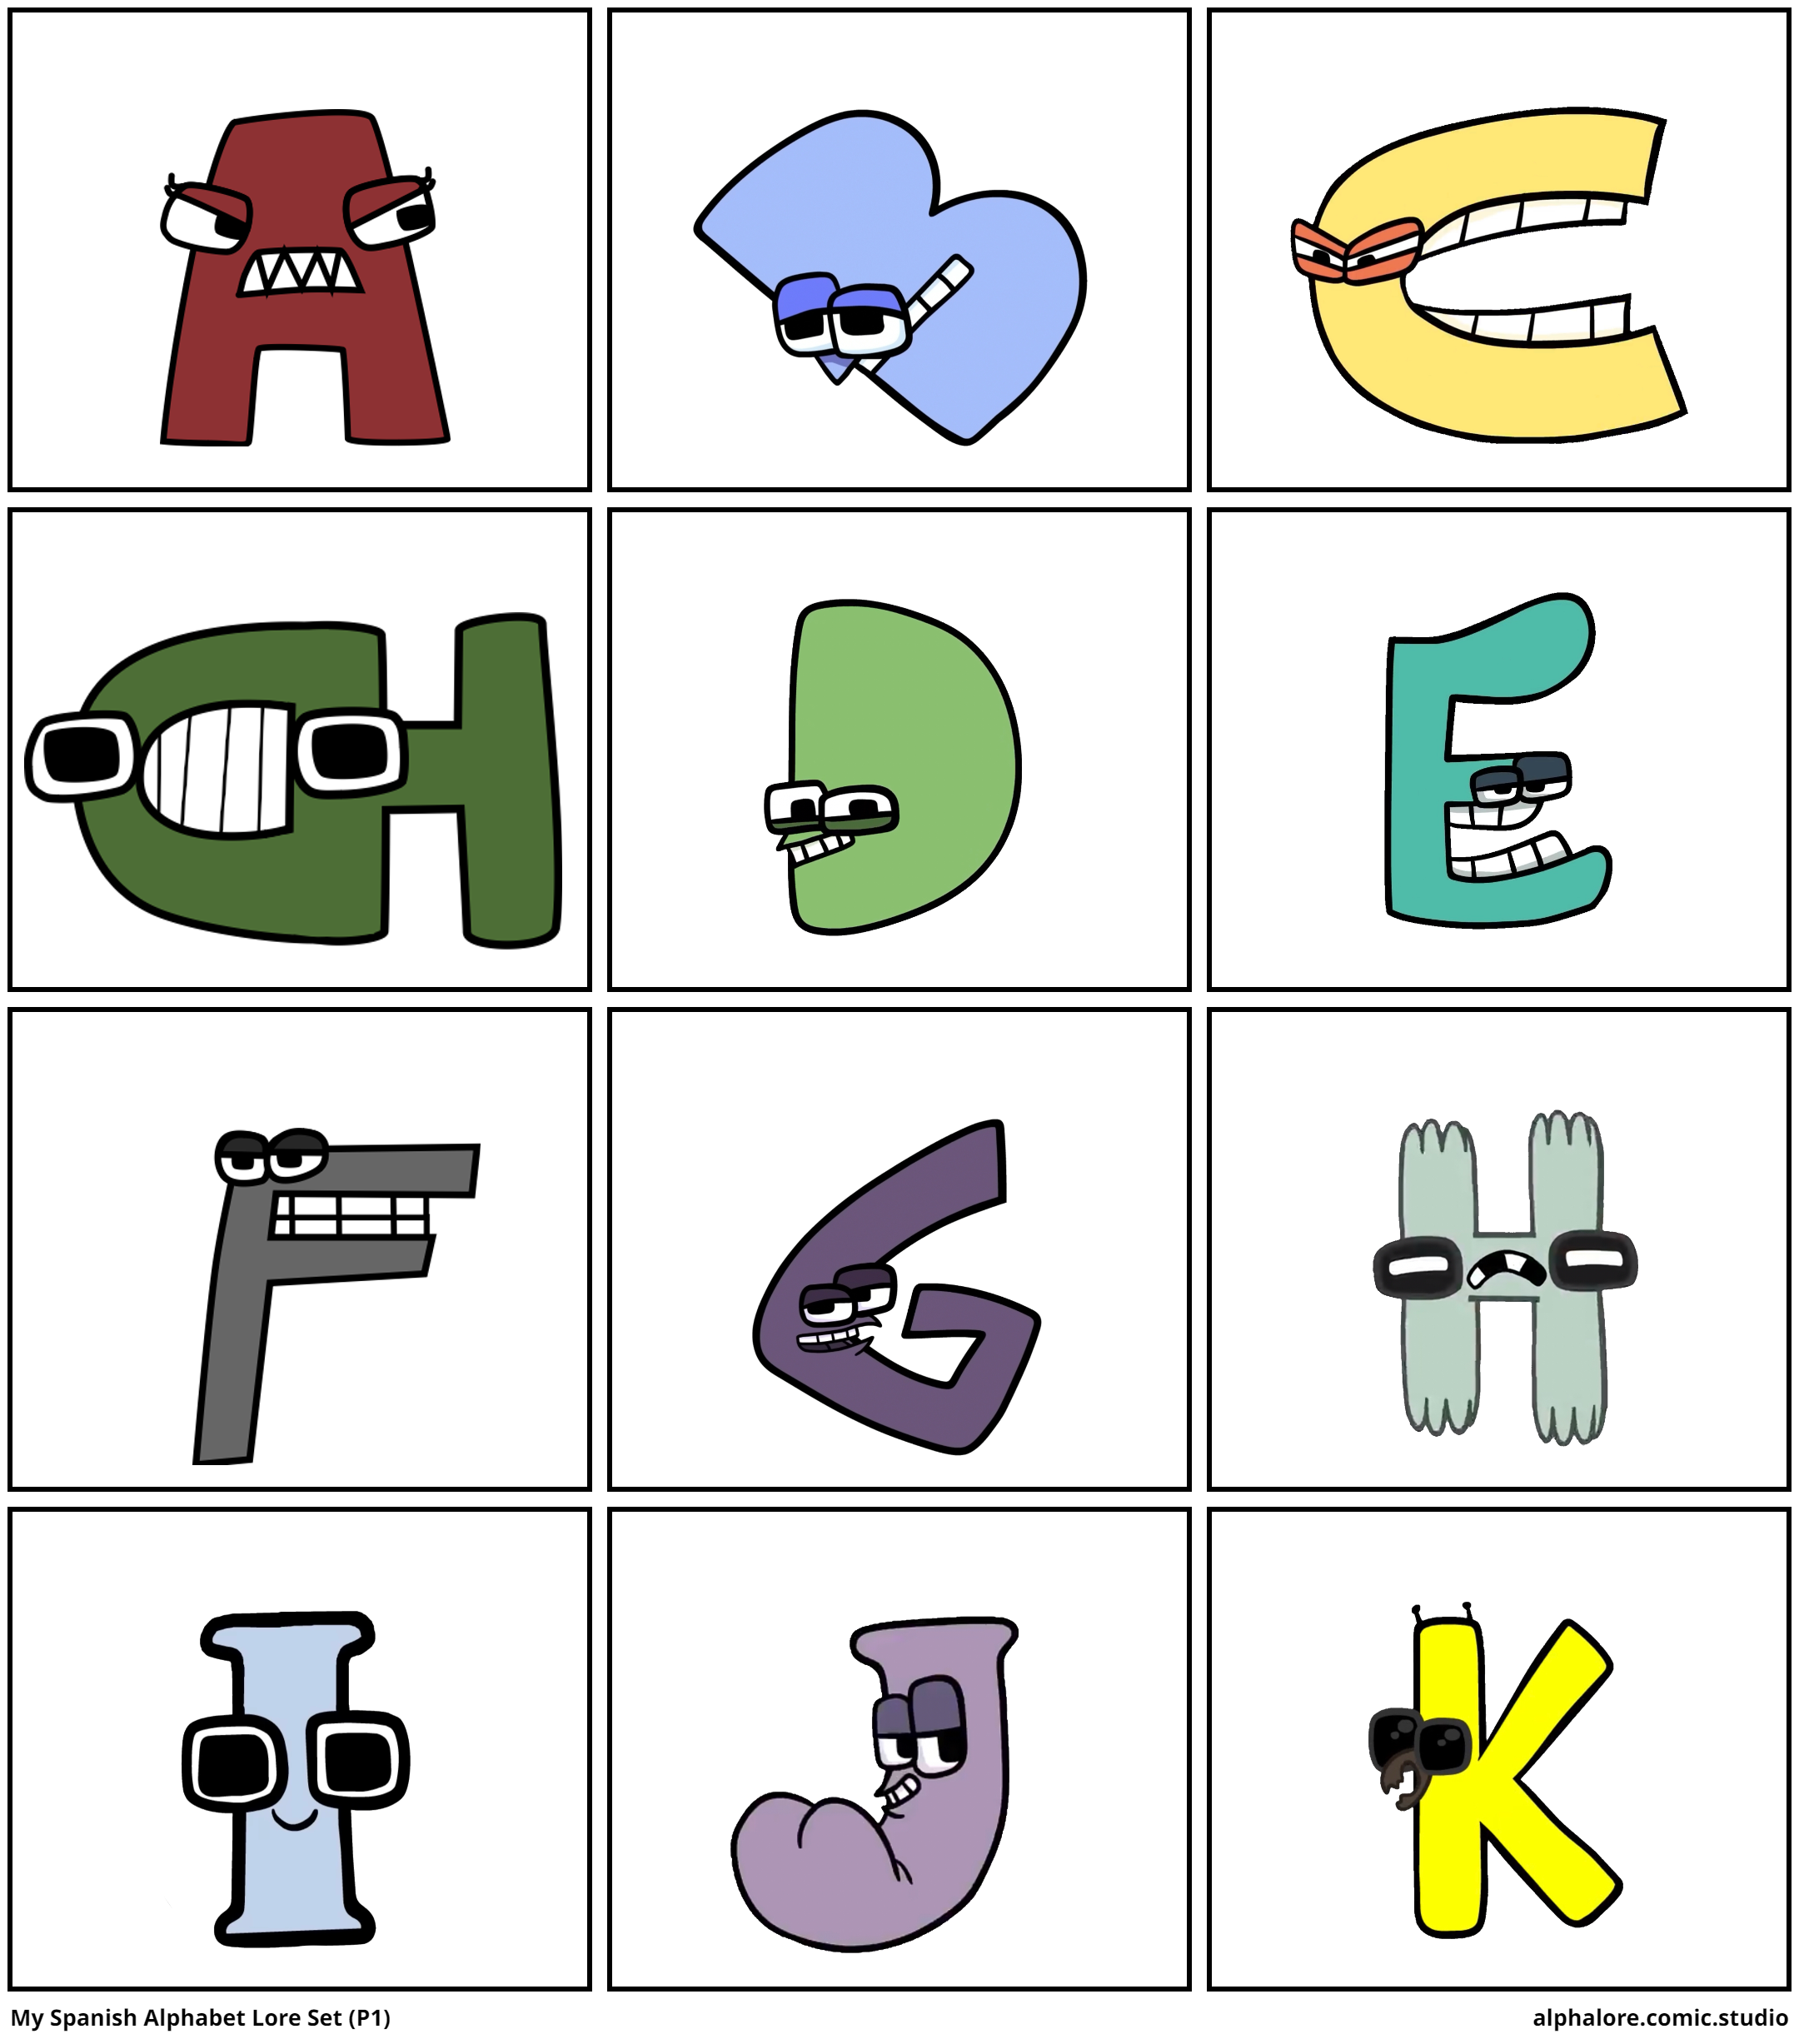 My Spanish Alphabet Lore Set (P1)